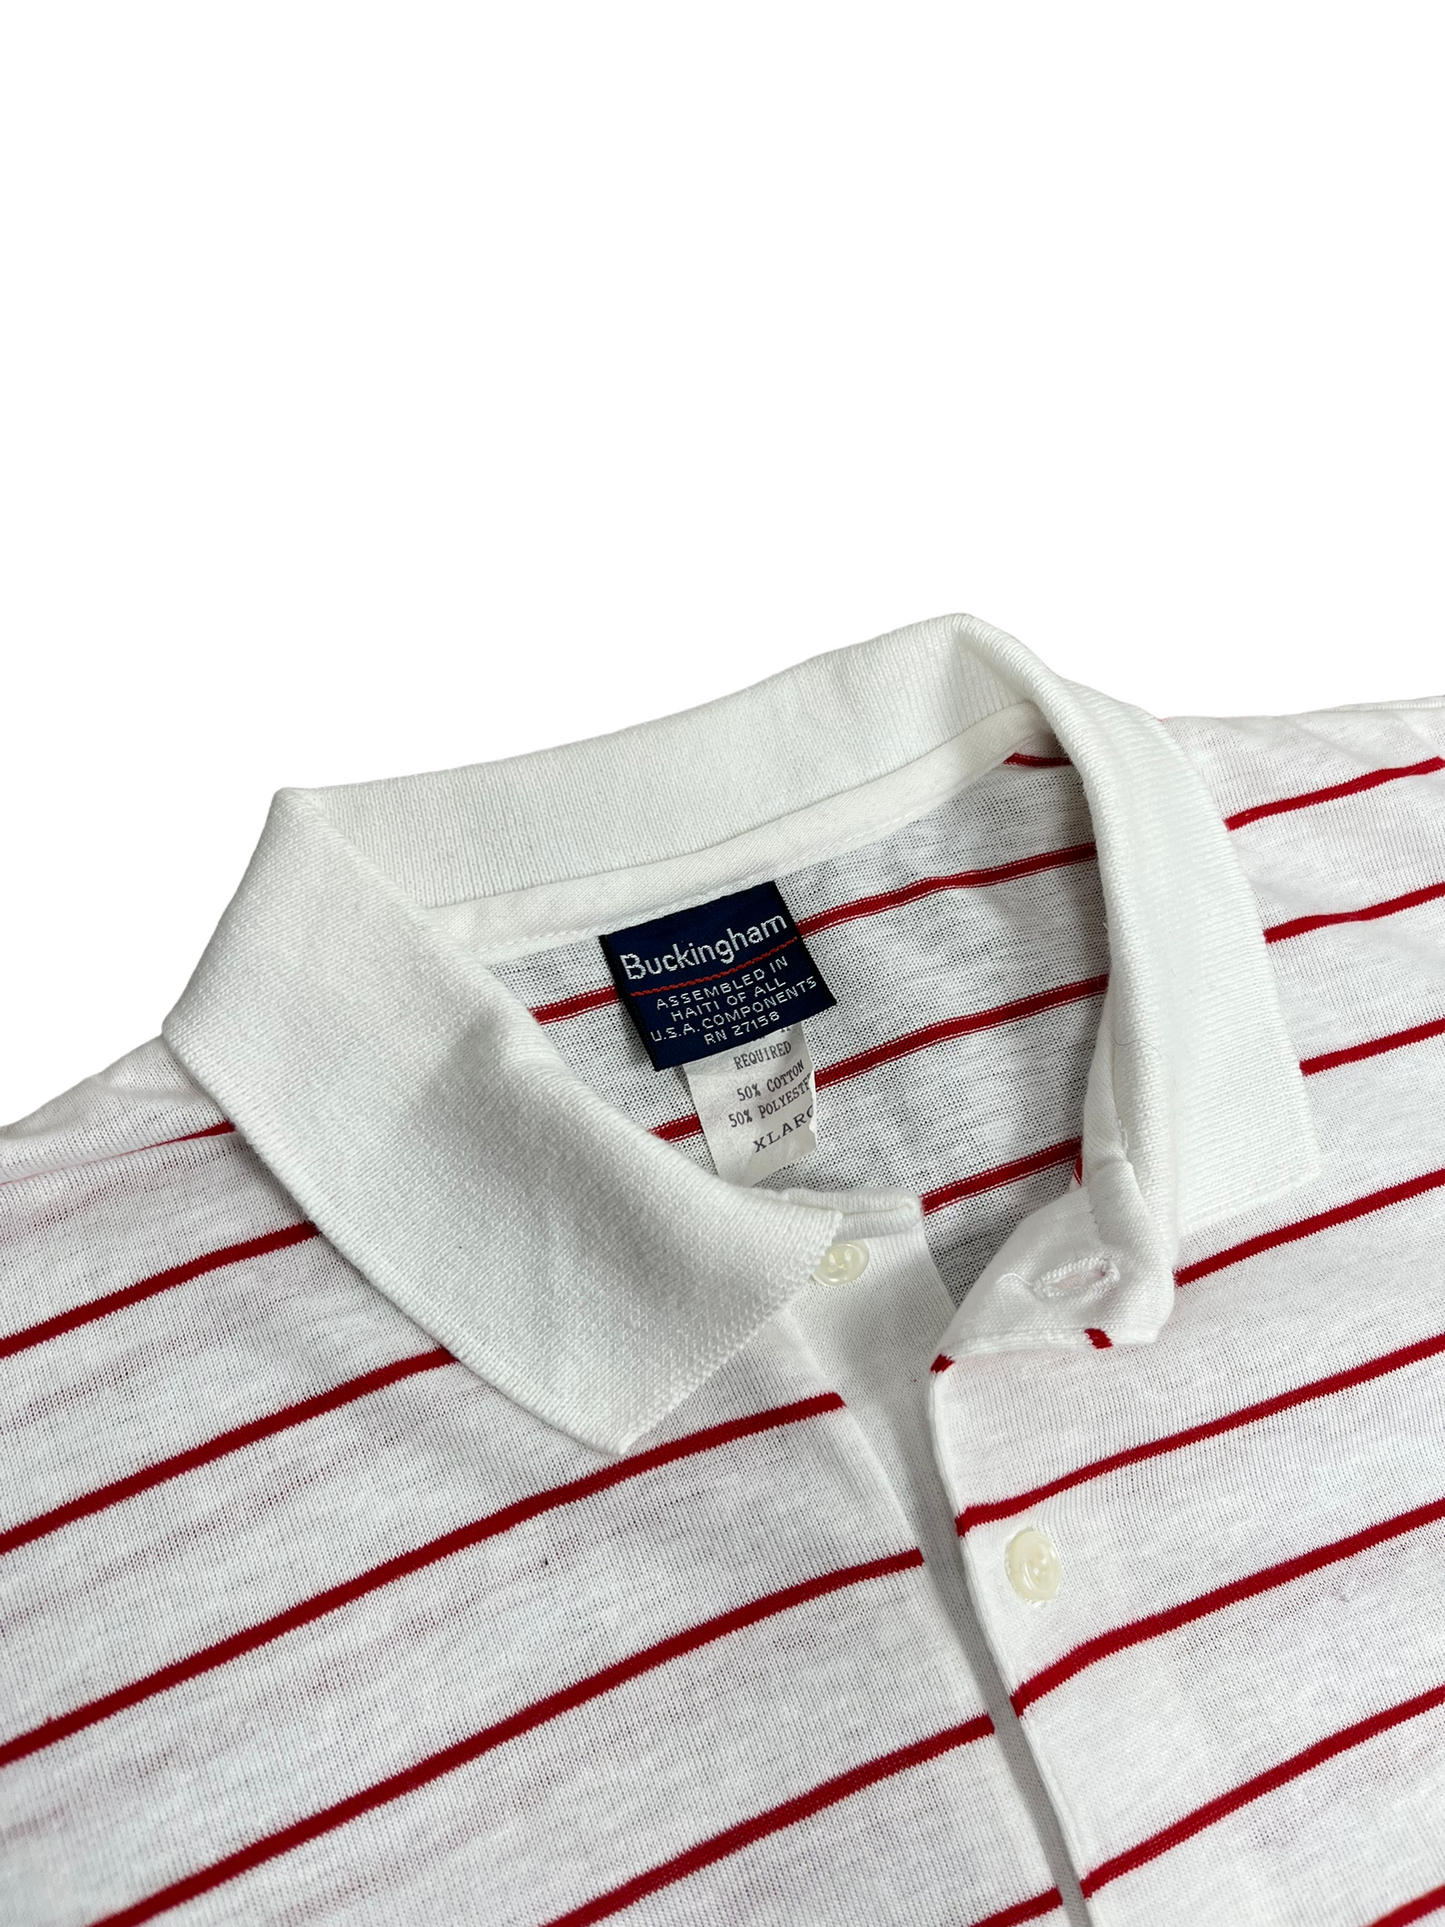 Vintage 80’s Buckingham Polo Shirt - XL